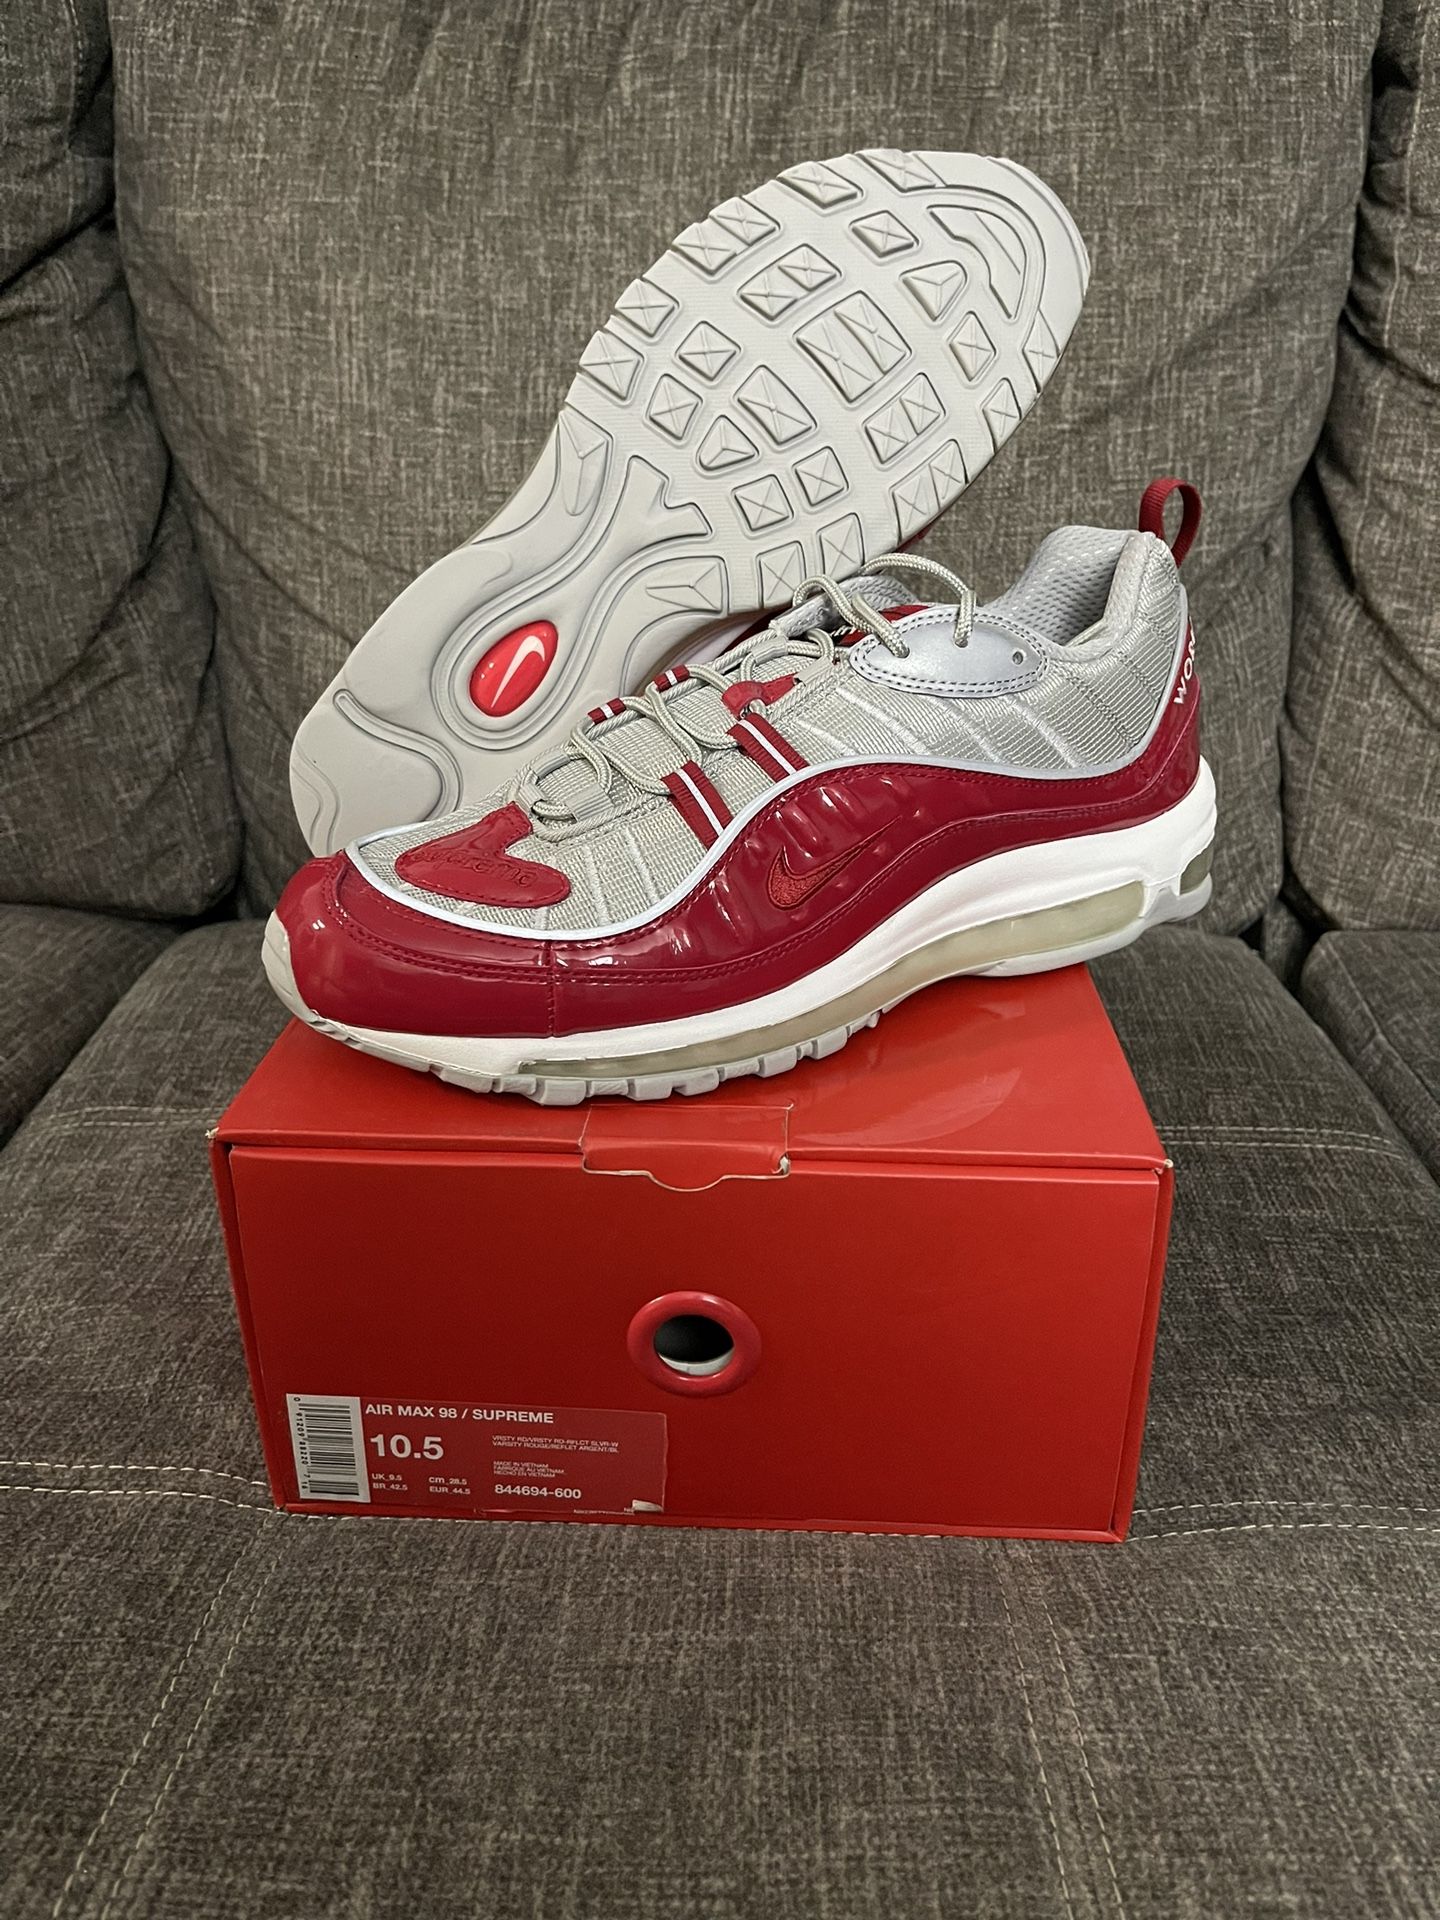 Nike Airmax 98 Supreme Red Size 10.5 Brand New Unworn